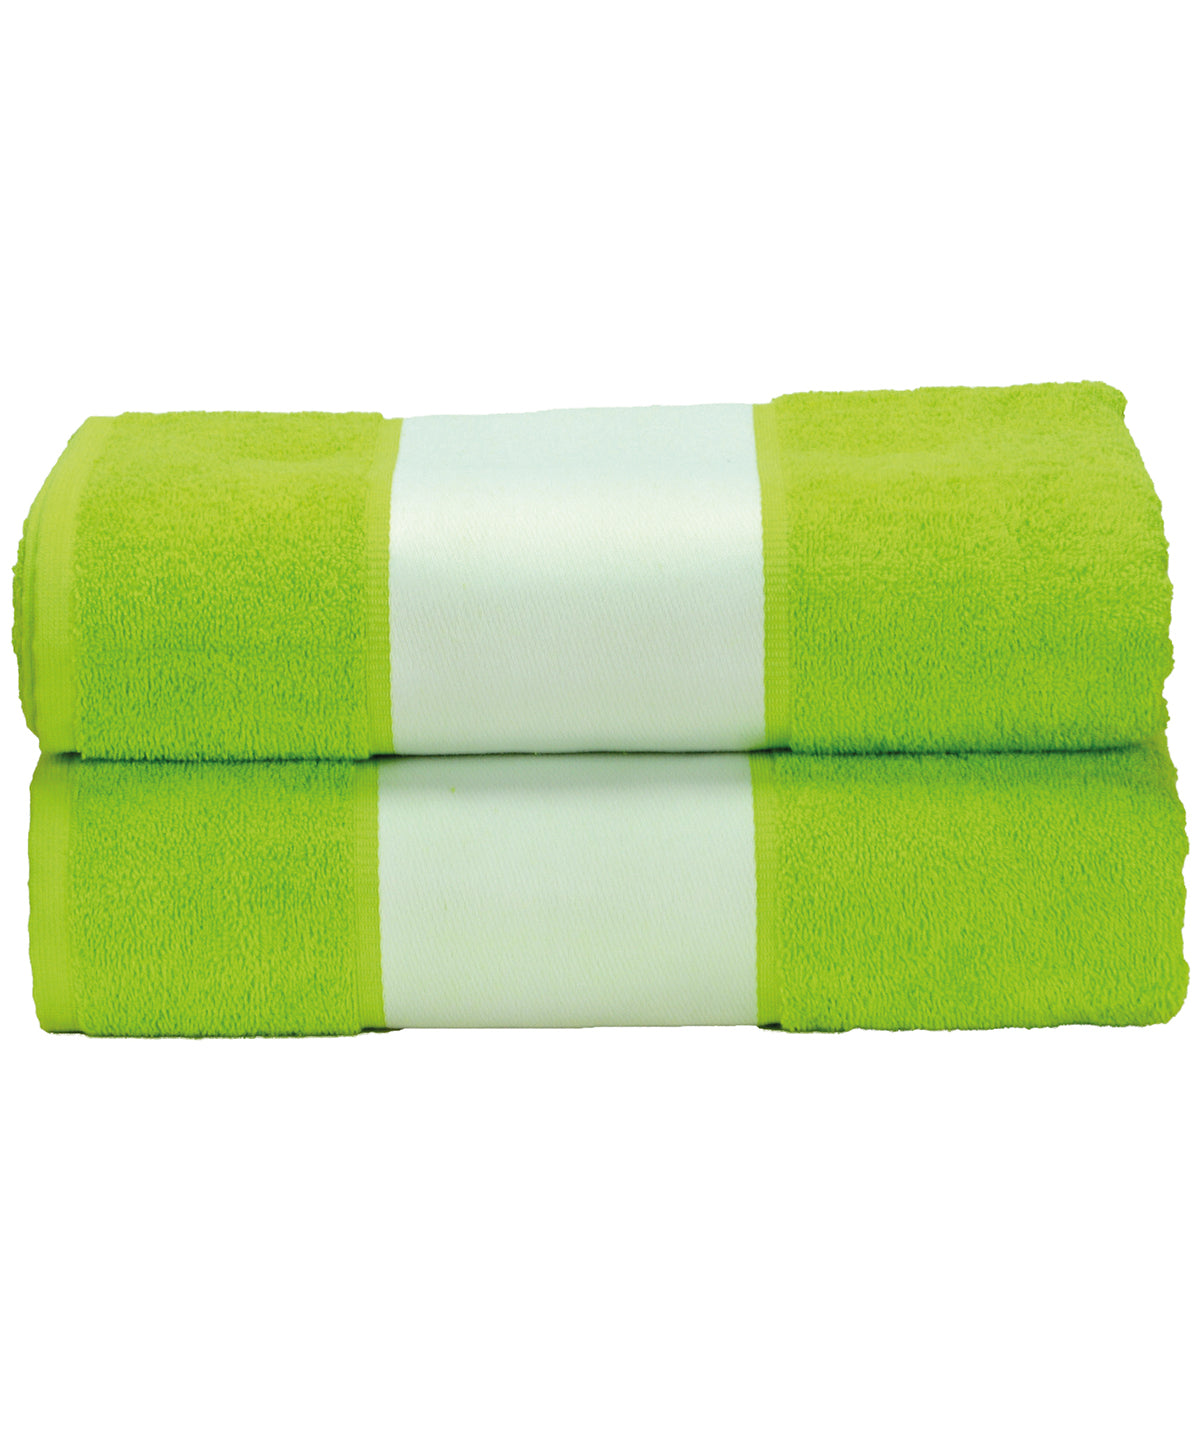 Personalised Towels - Lime A&R Towels ARTG® SUBLI-Me® bath towel